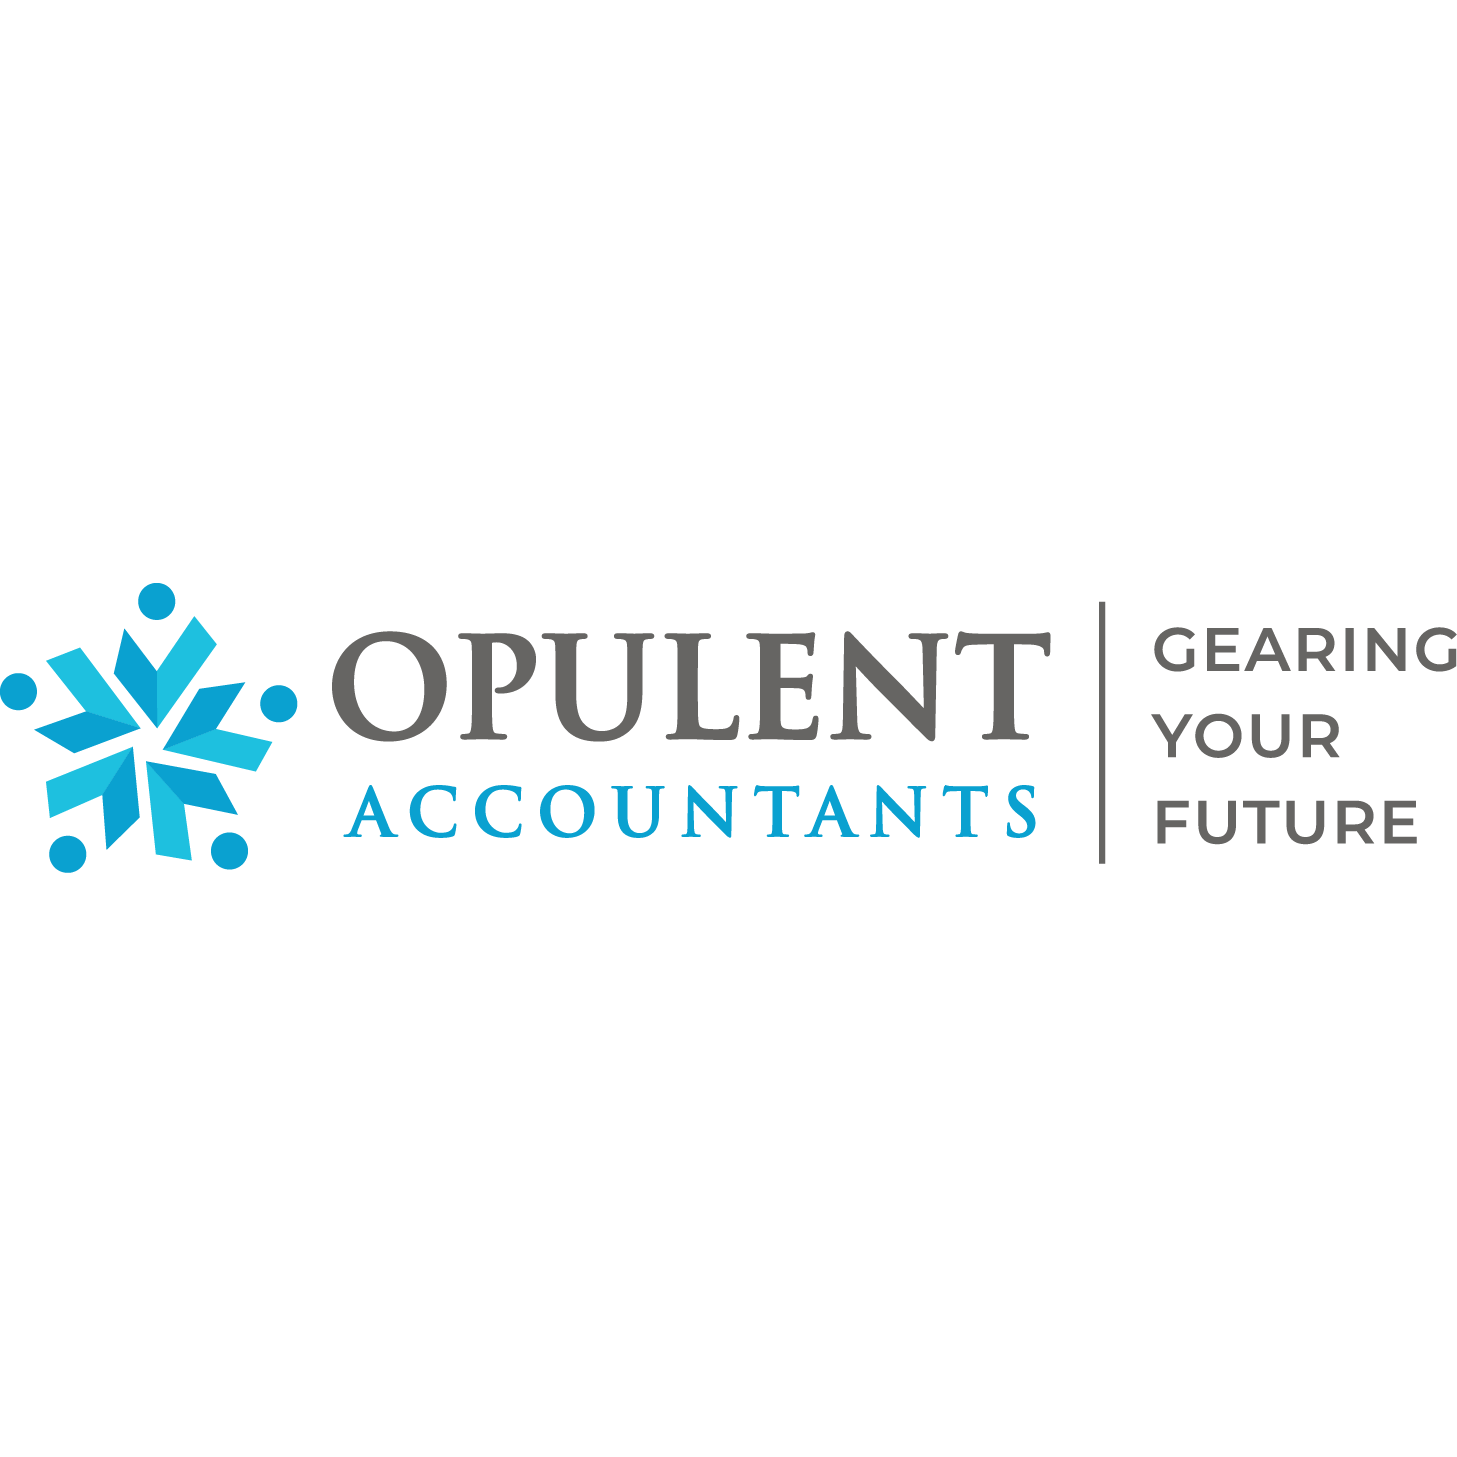 Opulent Accountants - Business Accountants and Tax Agents - Glen Waverley and Mount Waverley Logo